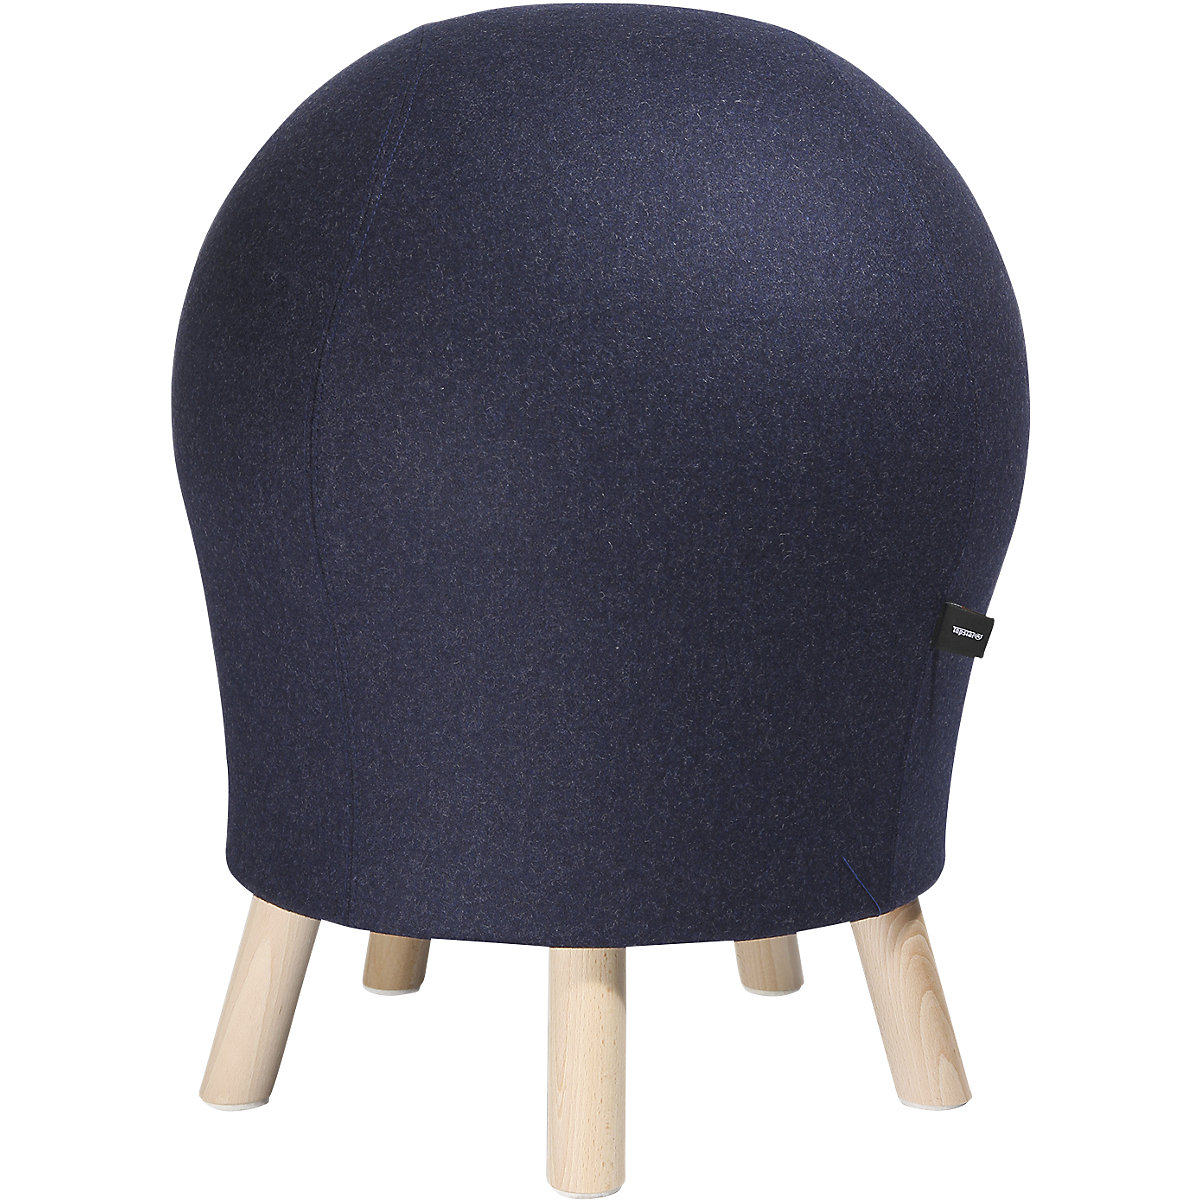 SITNESS 5 ALPINE fitness stool – Topstar, seat height approx. 620 mm, dark blue cover-7